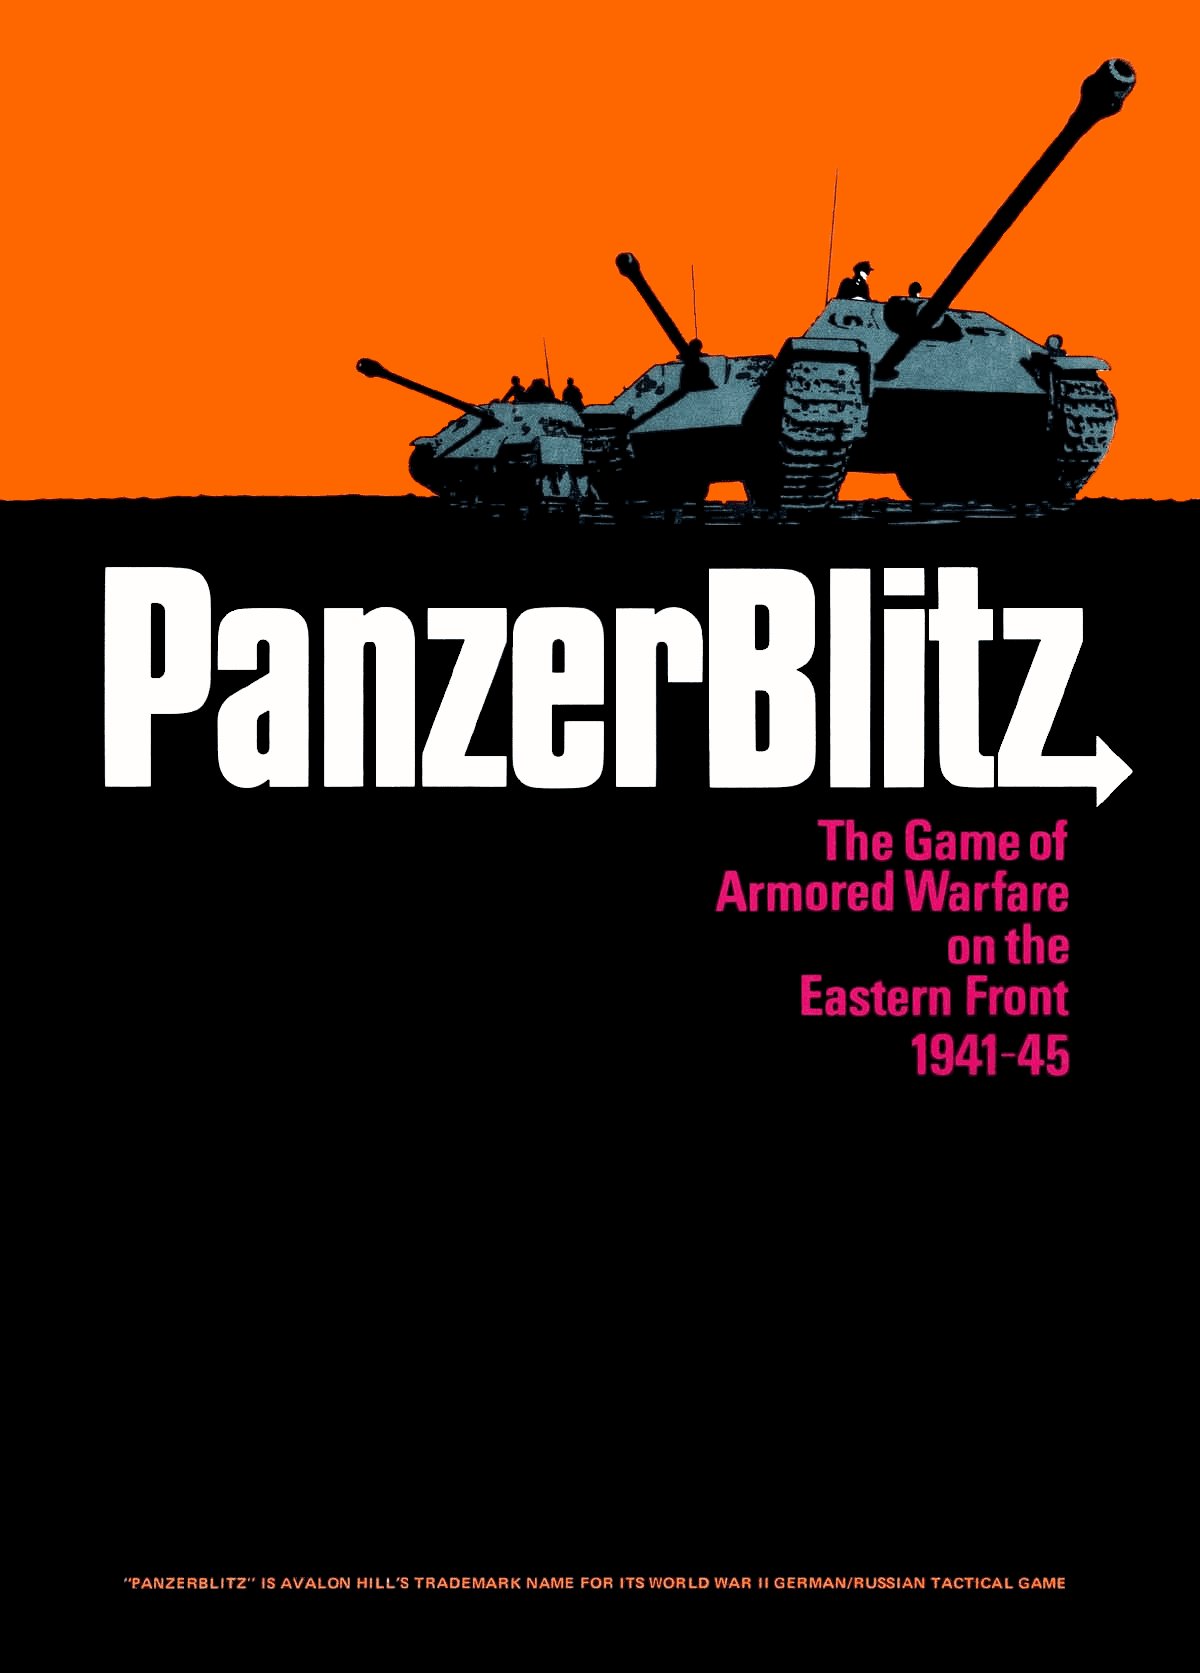 PanzerBlitz